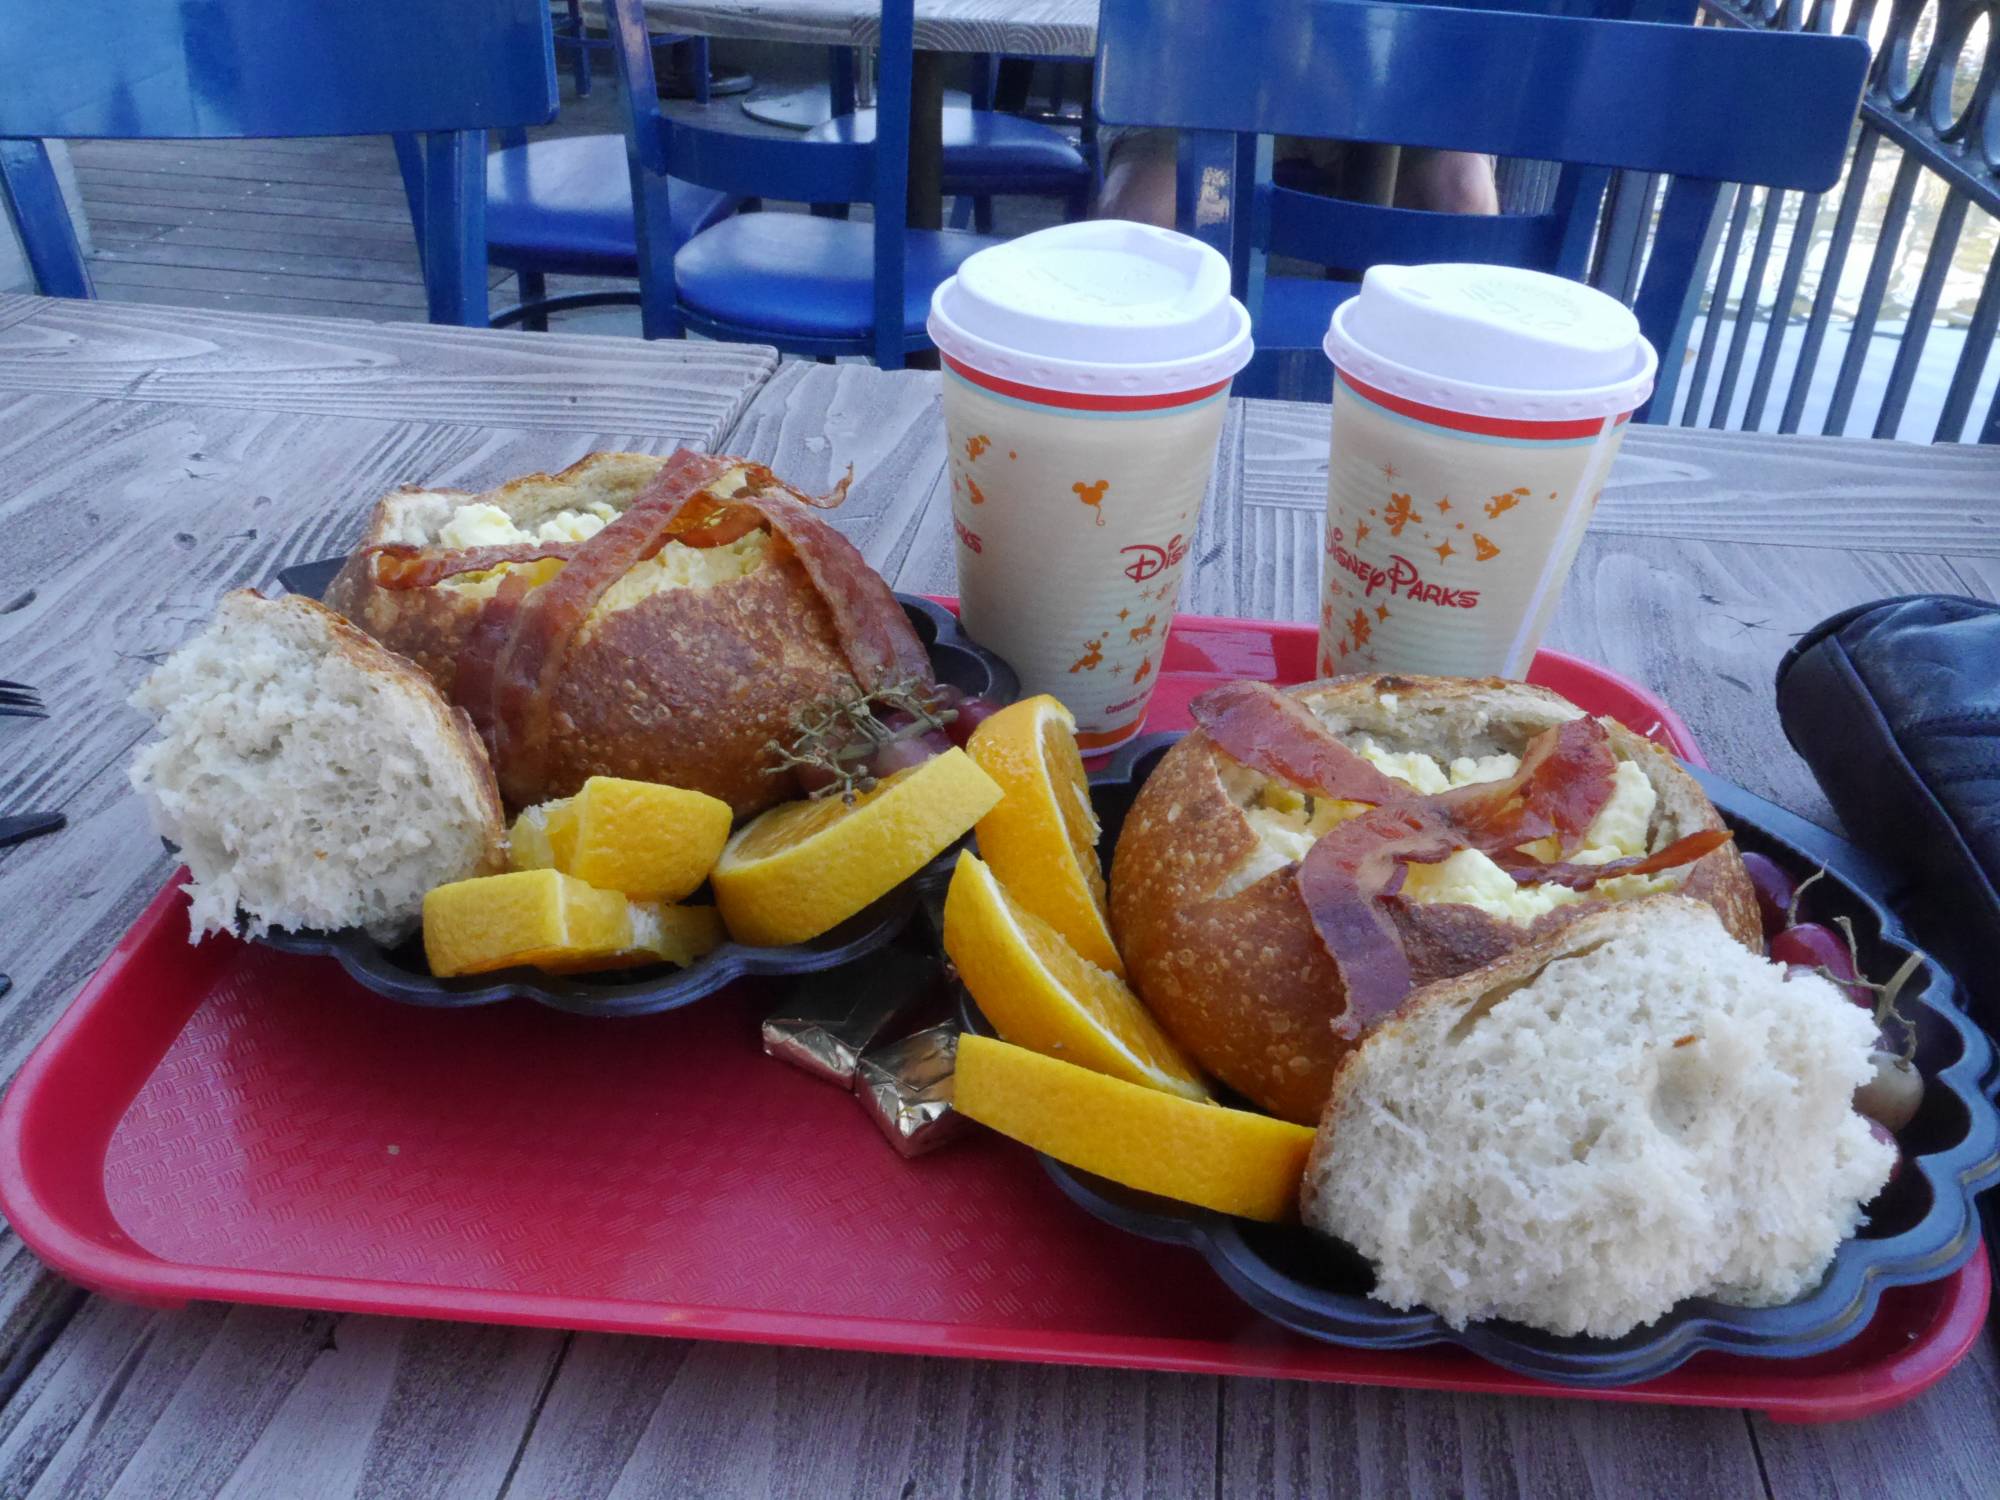 Enjoy delicious breakfast options at both Walt Disney World and Disneyland |PassPorter.com